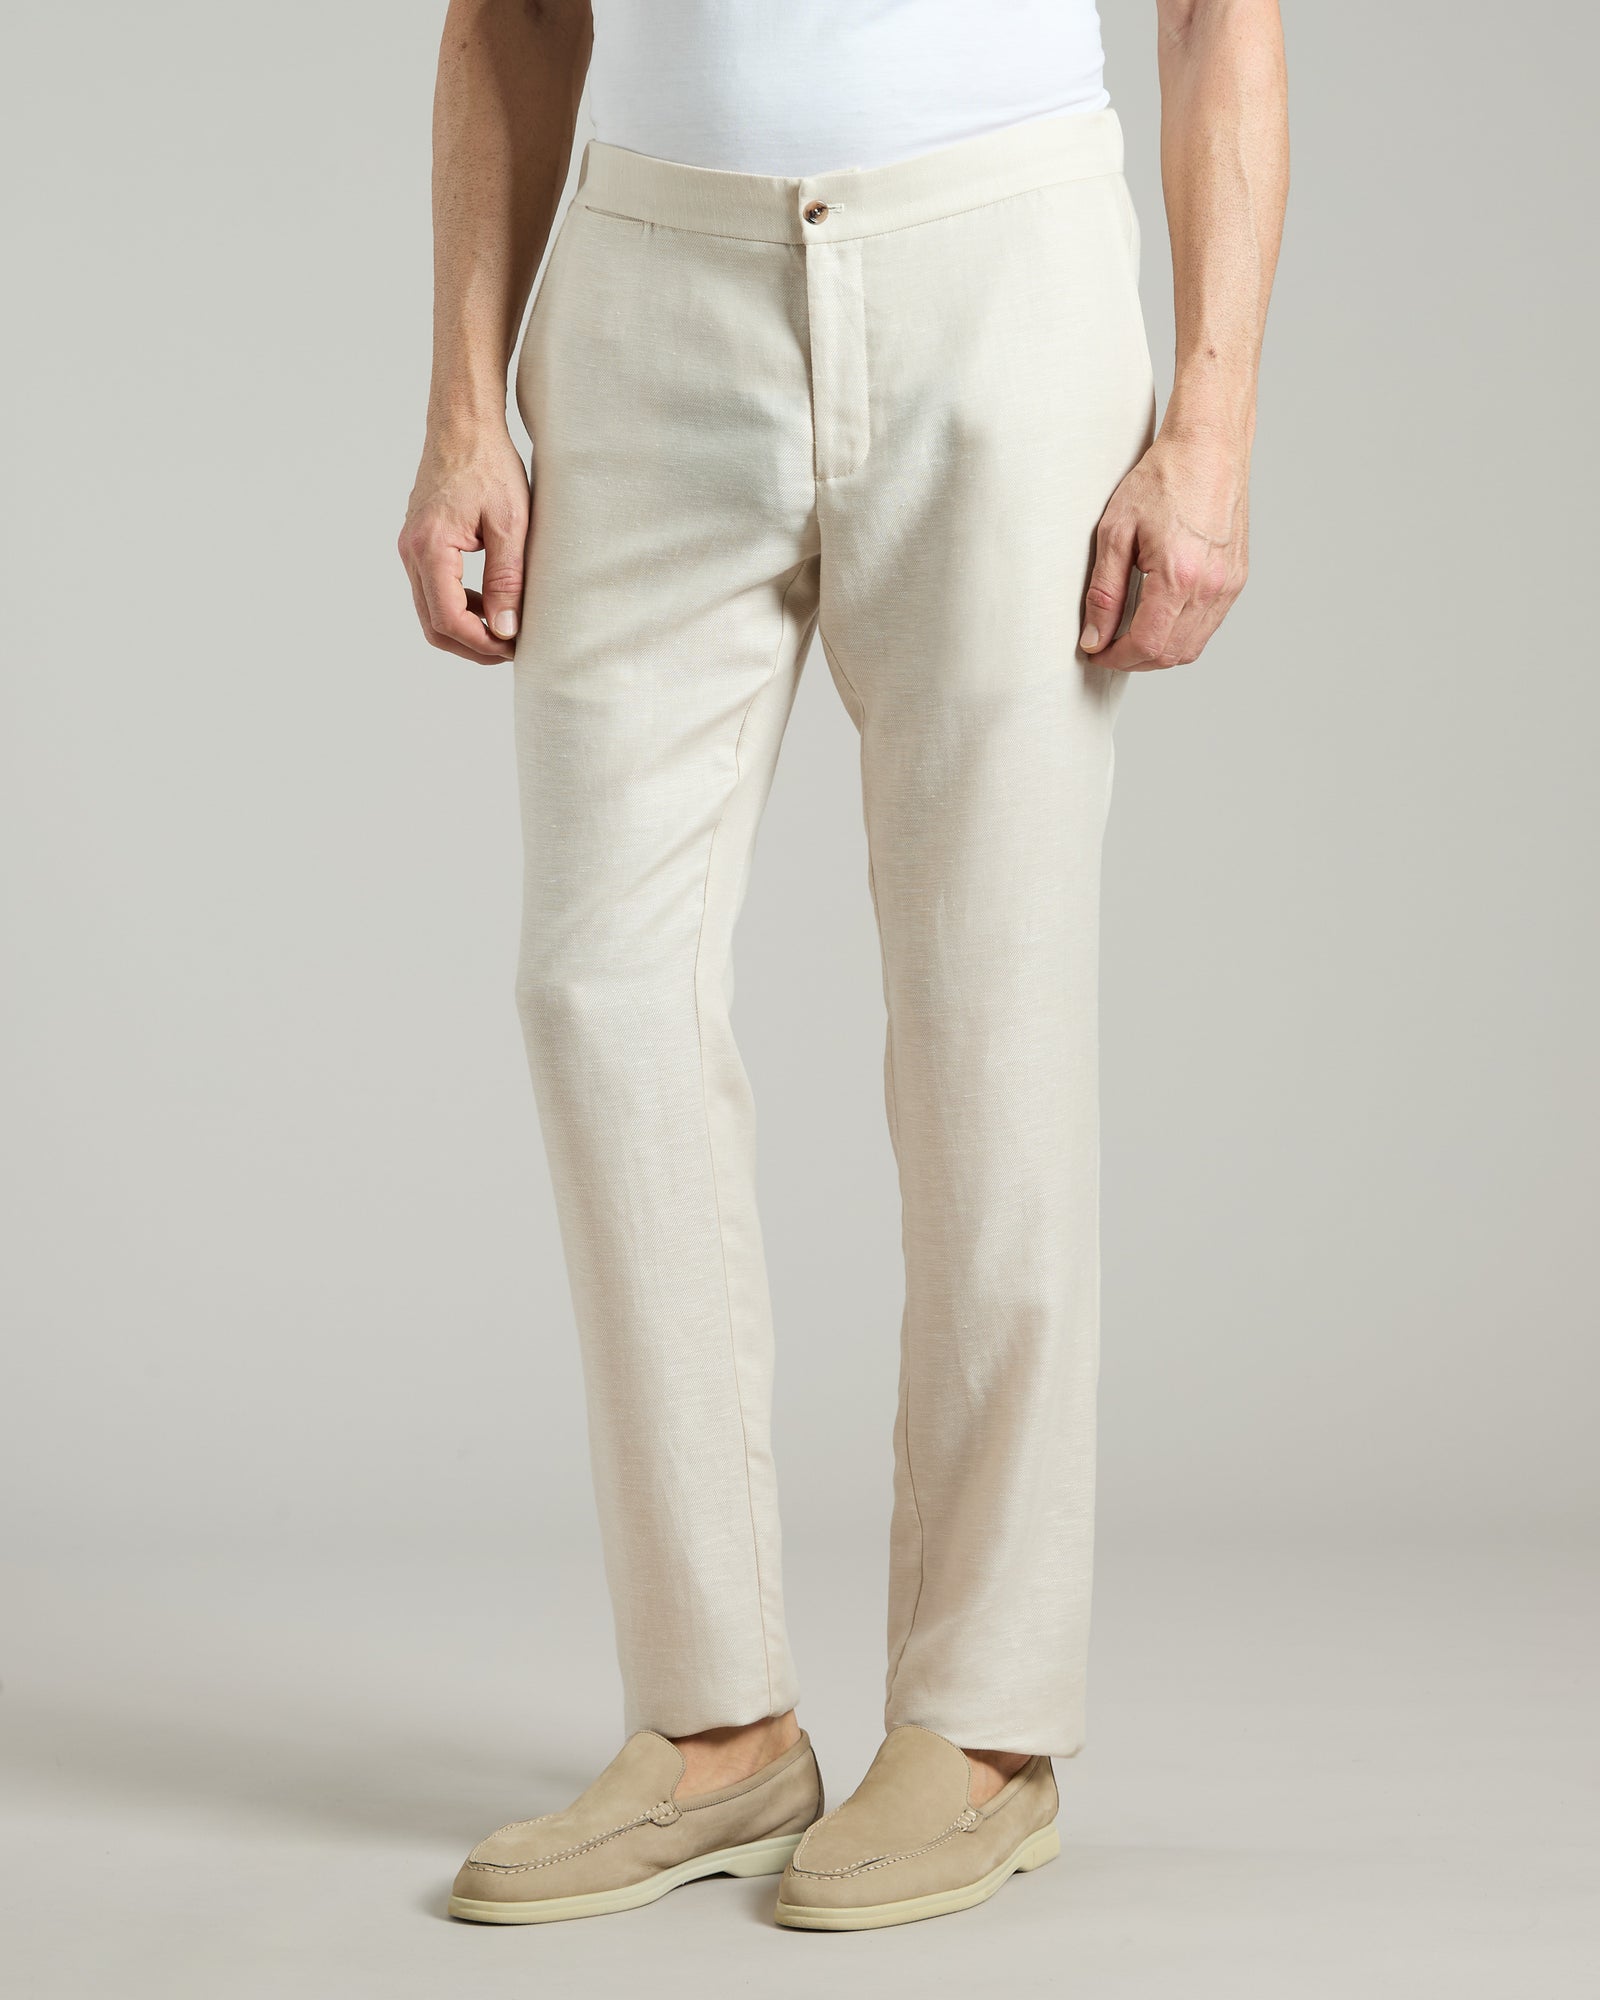 Pantalone in Summer Cashmere 4.0 beige